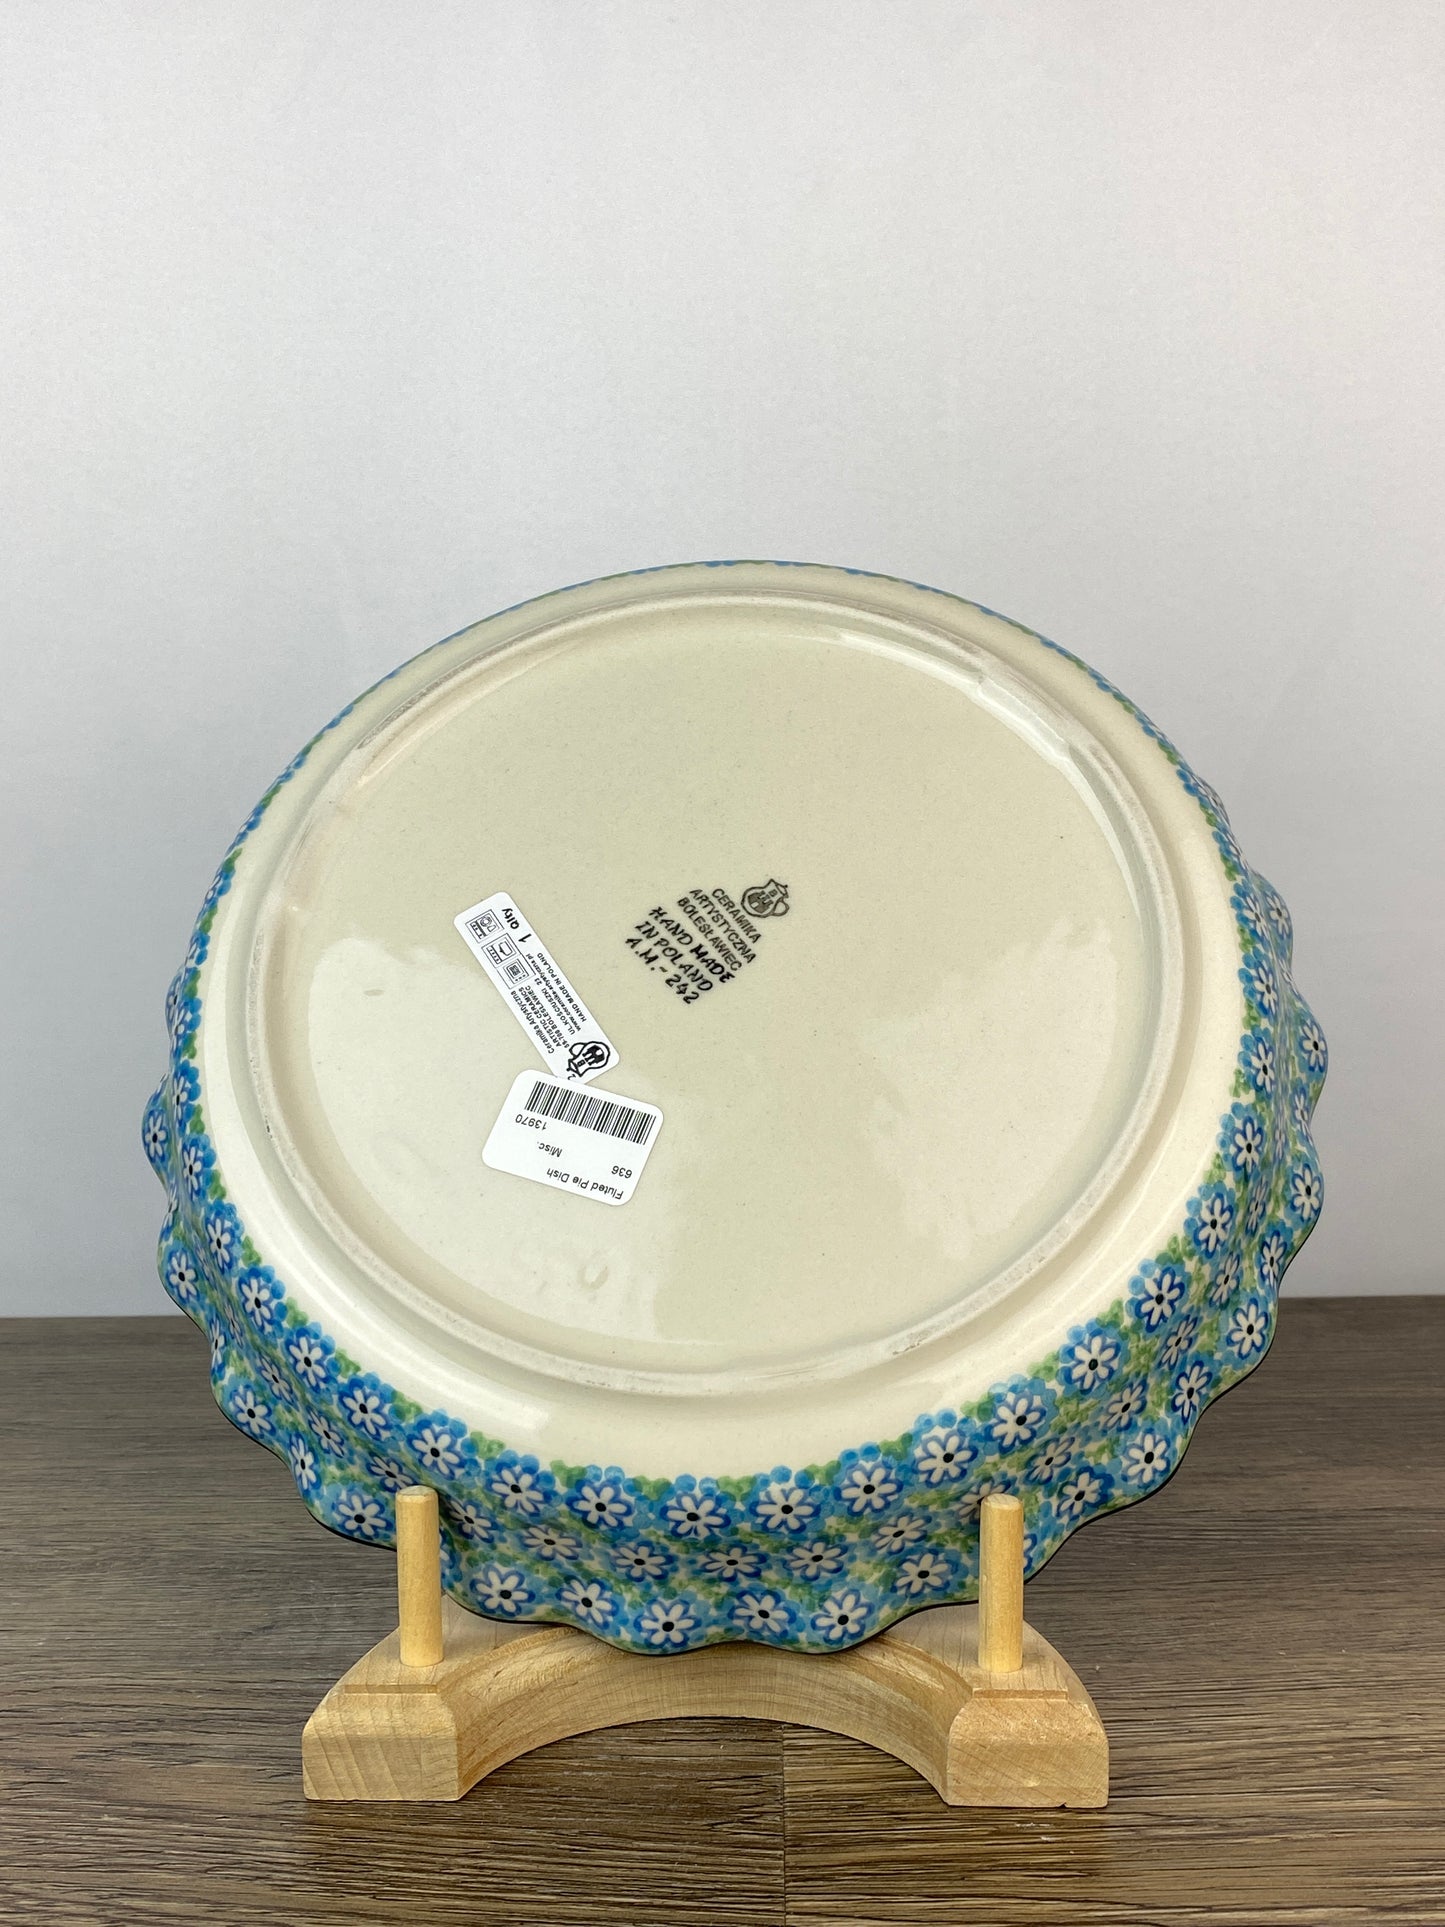 Ruffled Pie Plate / Round Baker  - Shape 636 - Pattern 2252